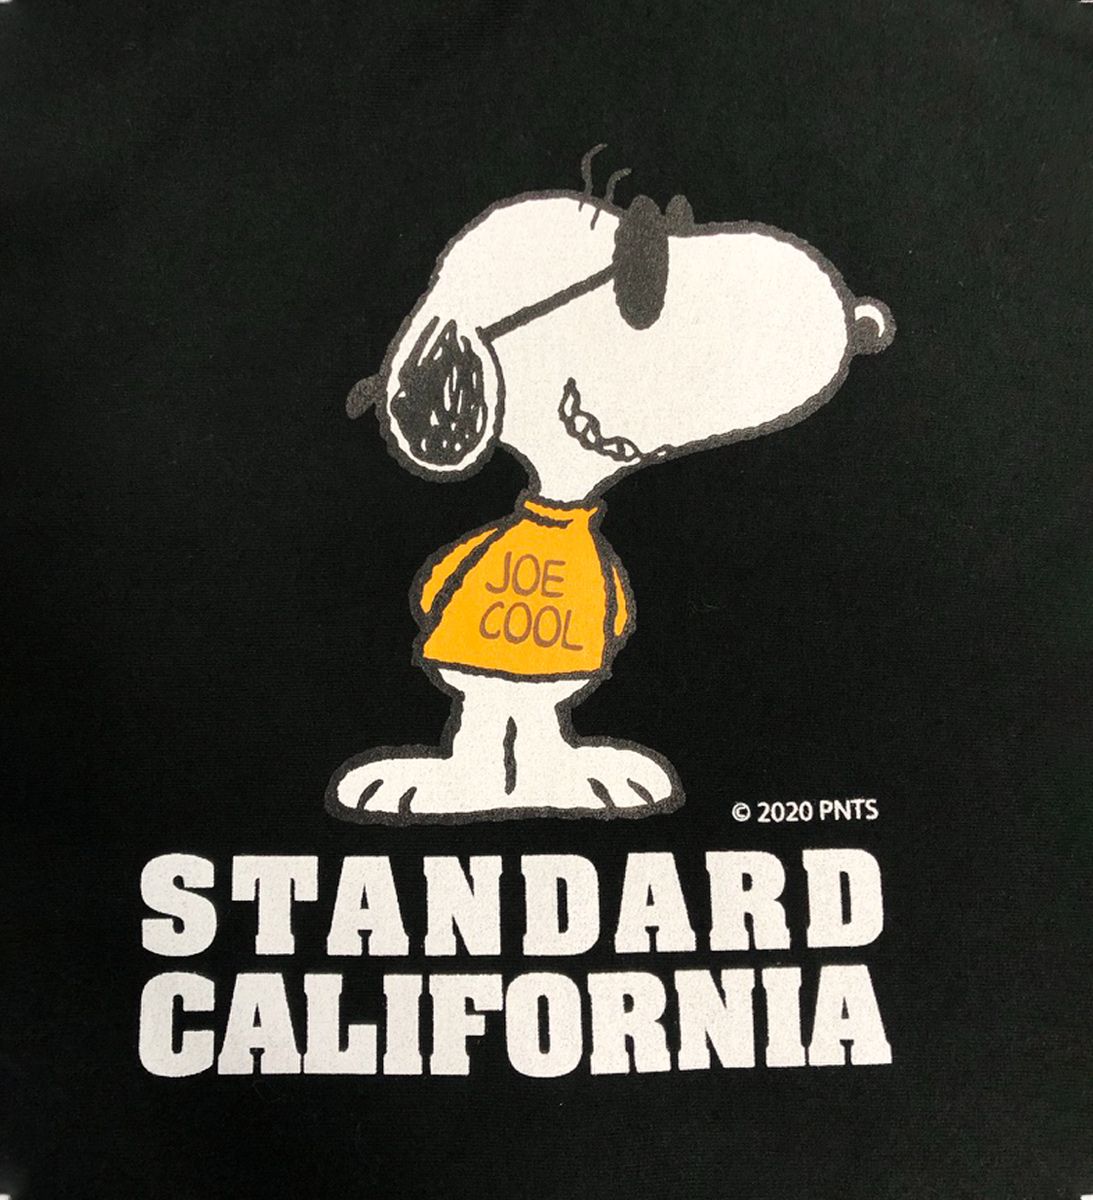 Standard California Snoopy Hooded Sweatshirt Black Peanuts Trailer Shop Online Store